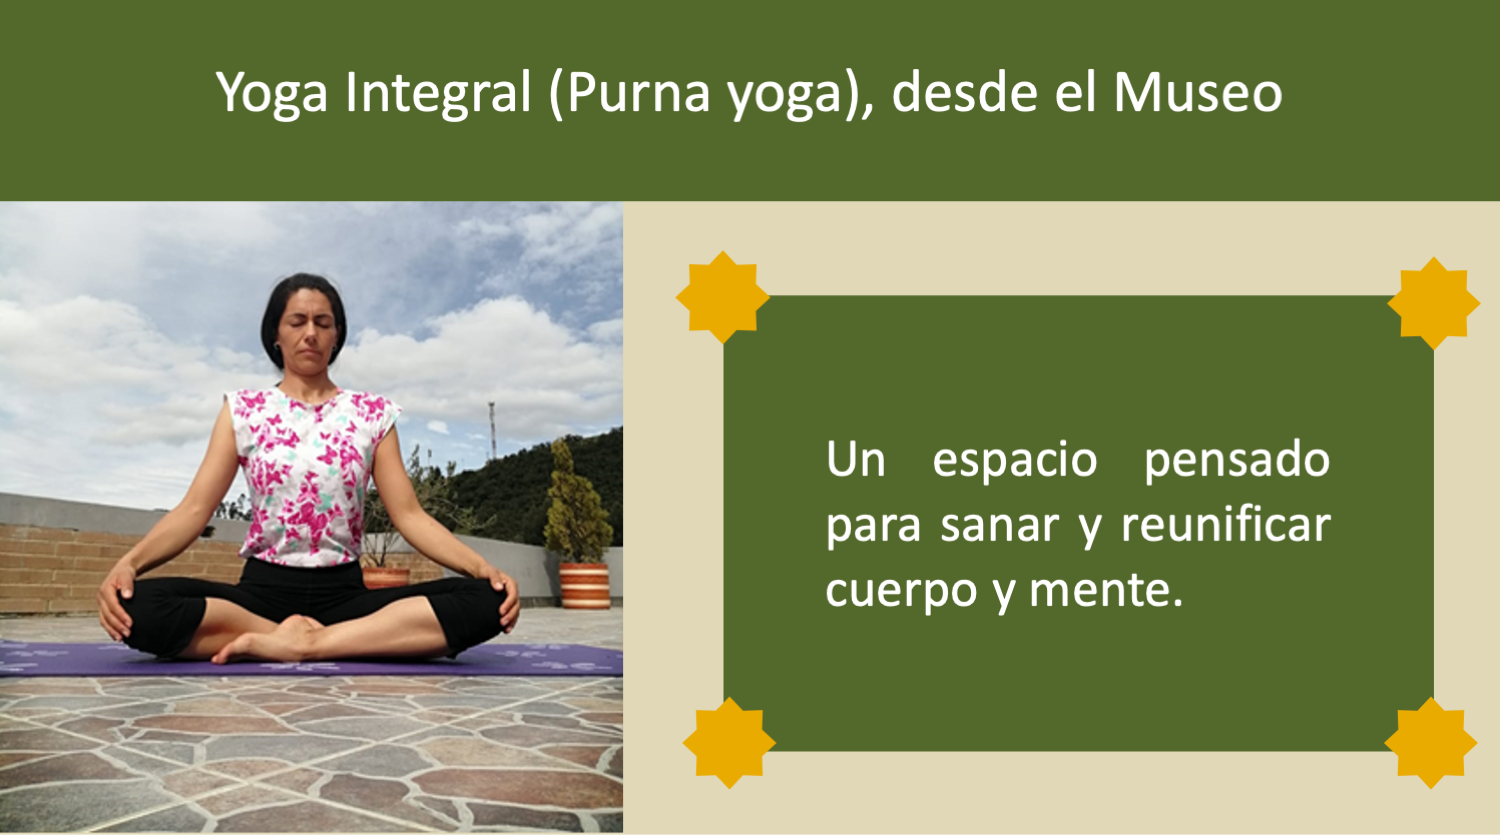 Yoga integral (Purna yoga) desde el Museo